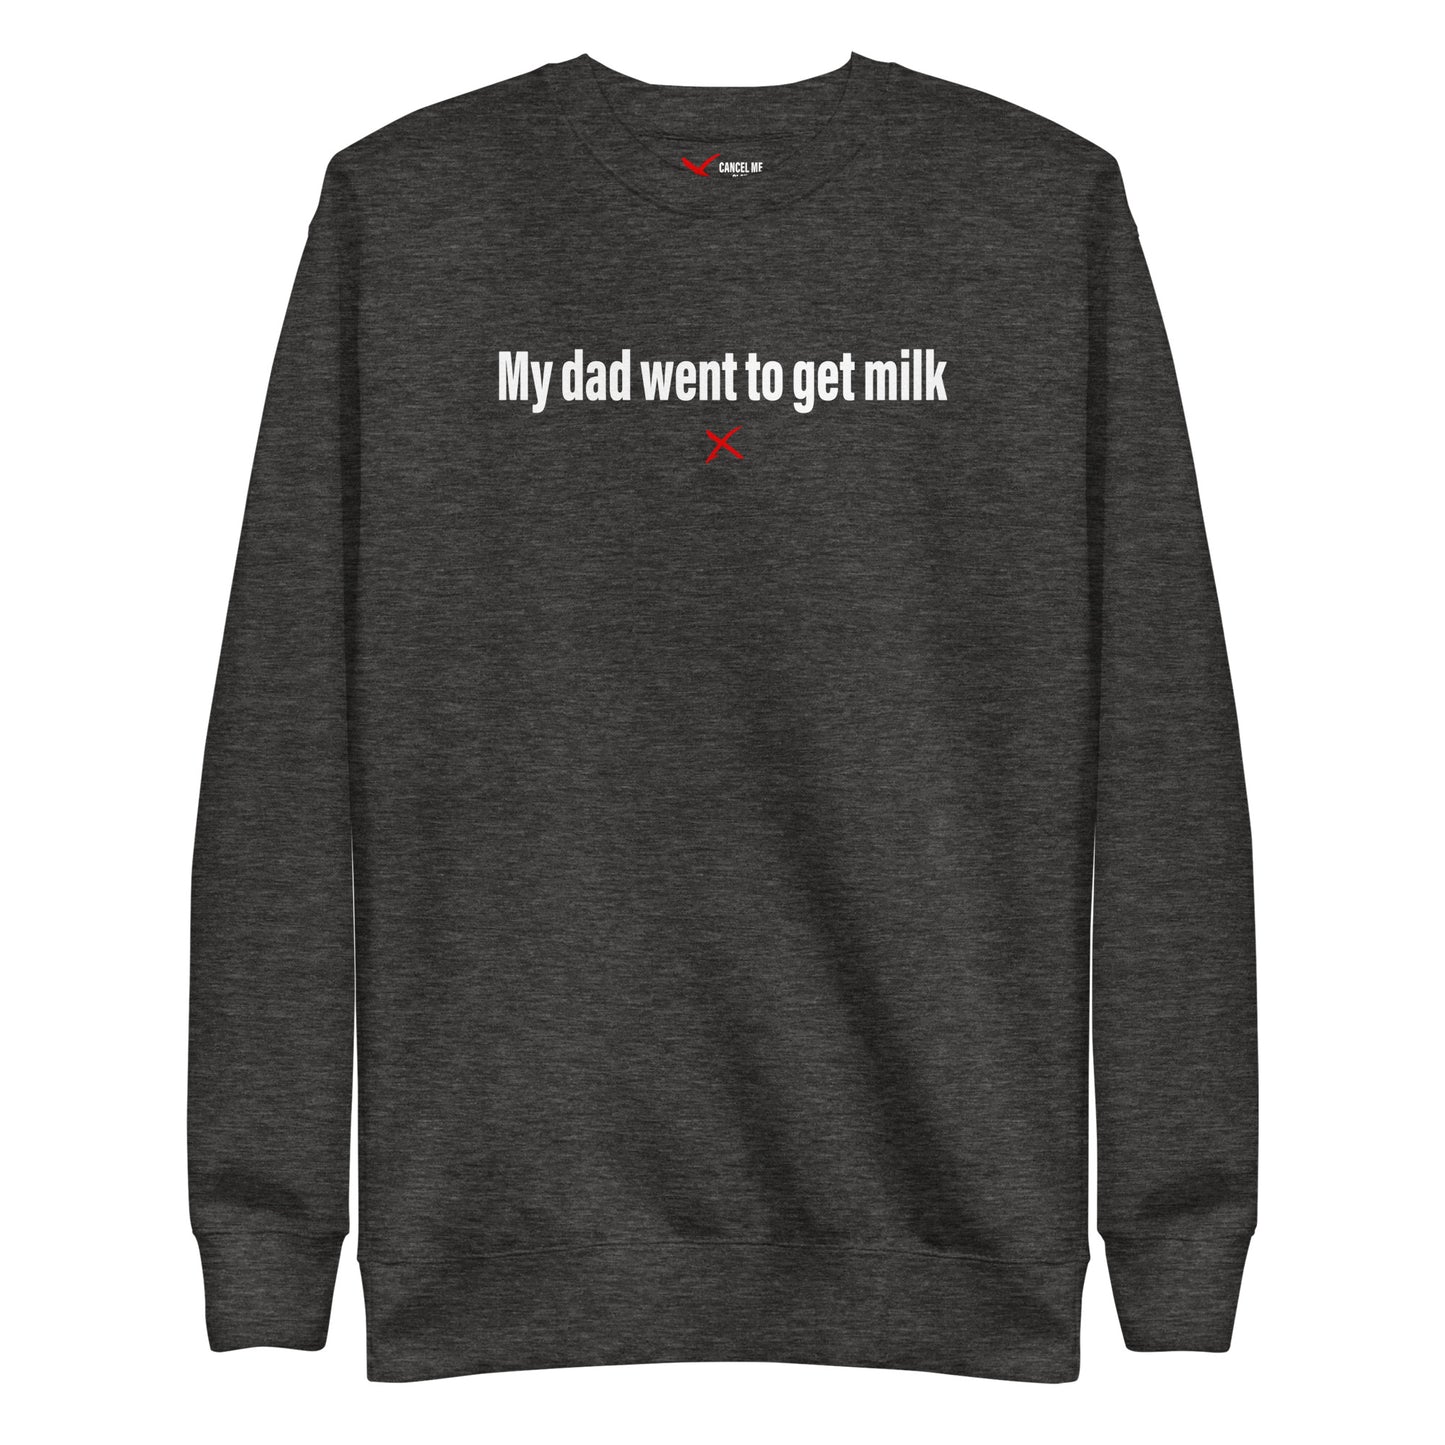 My dad went to get milk - Sweatshirt